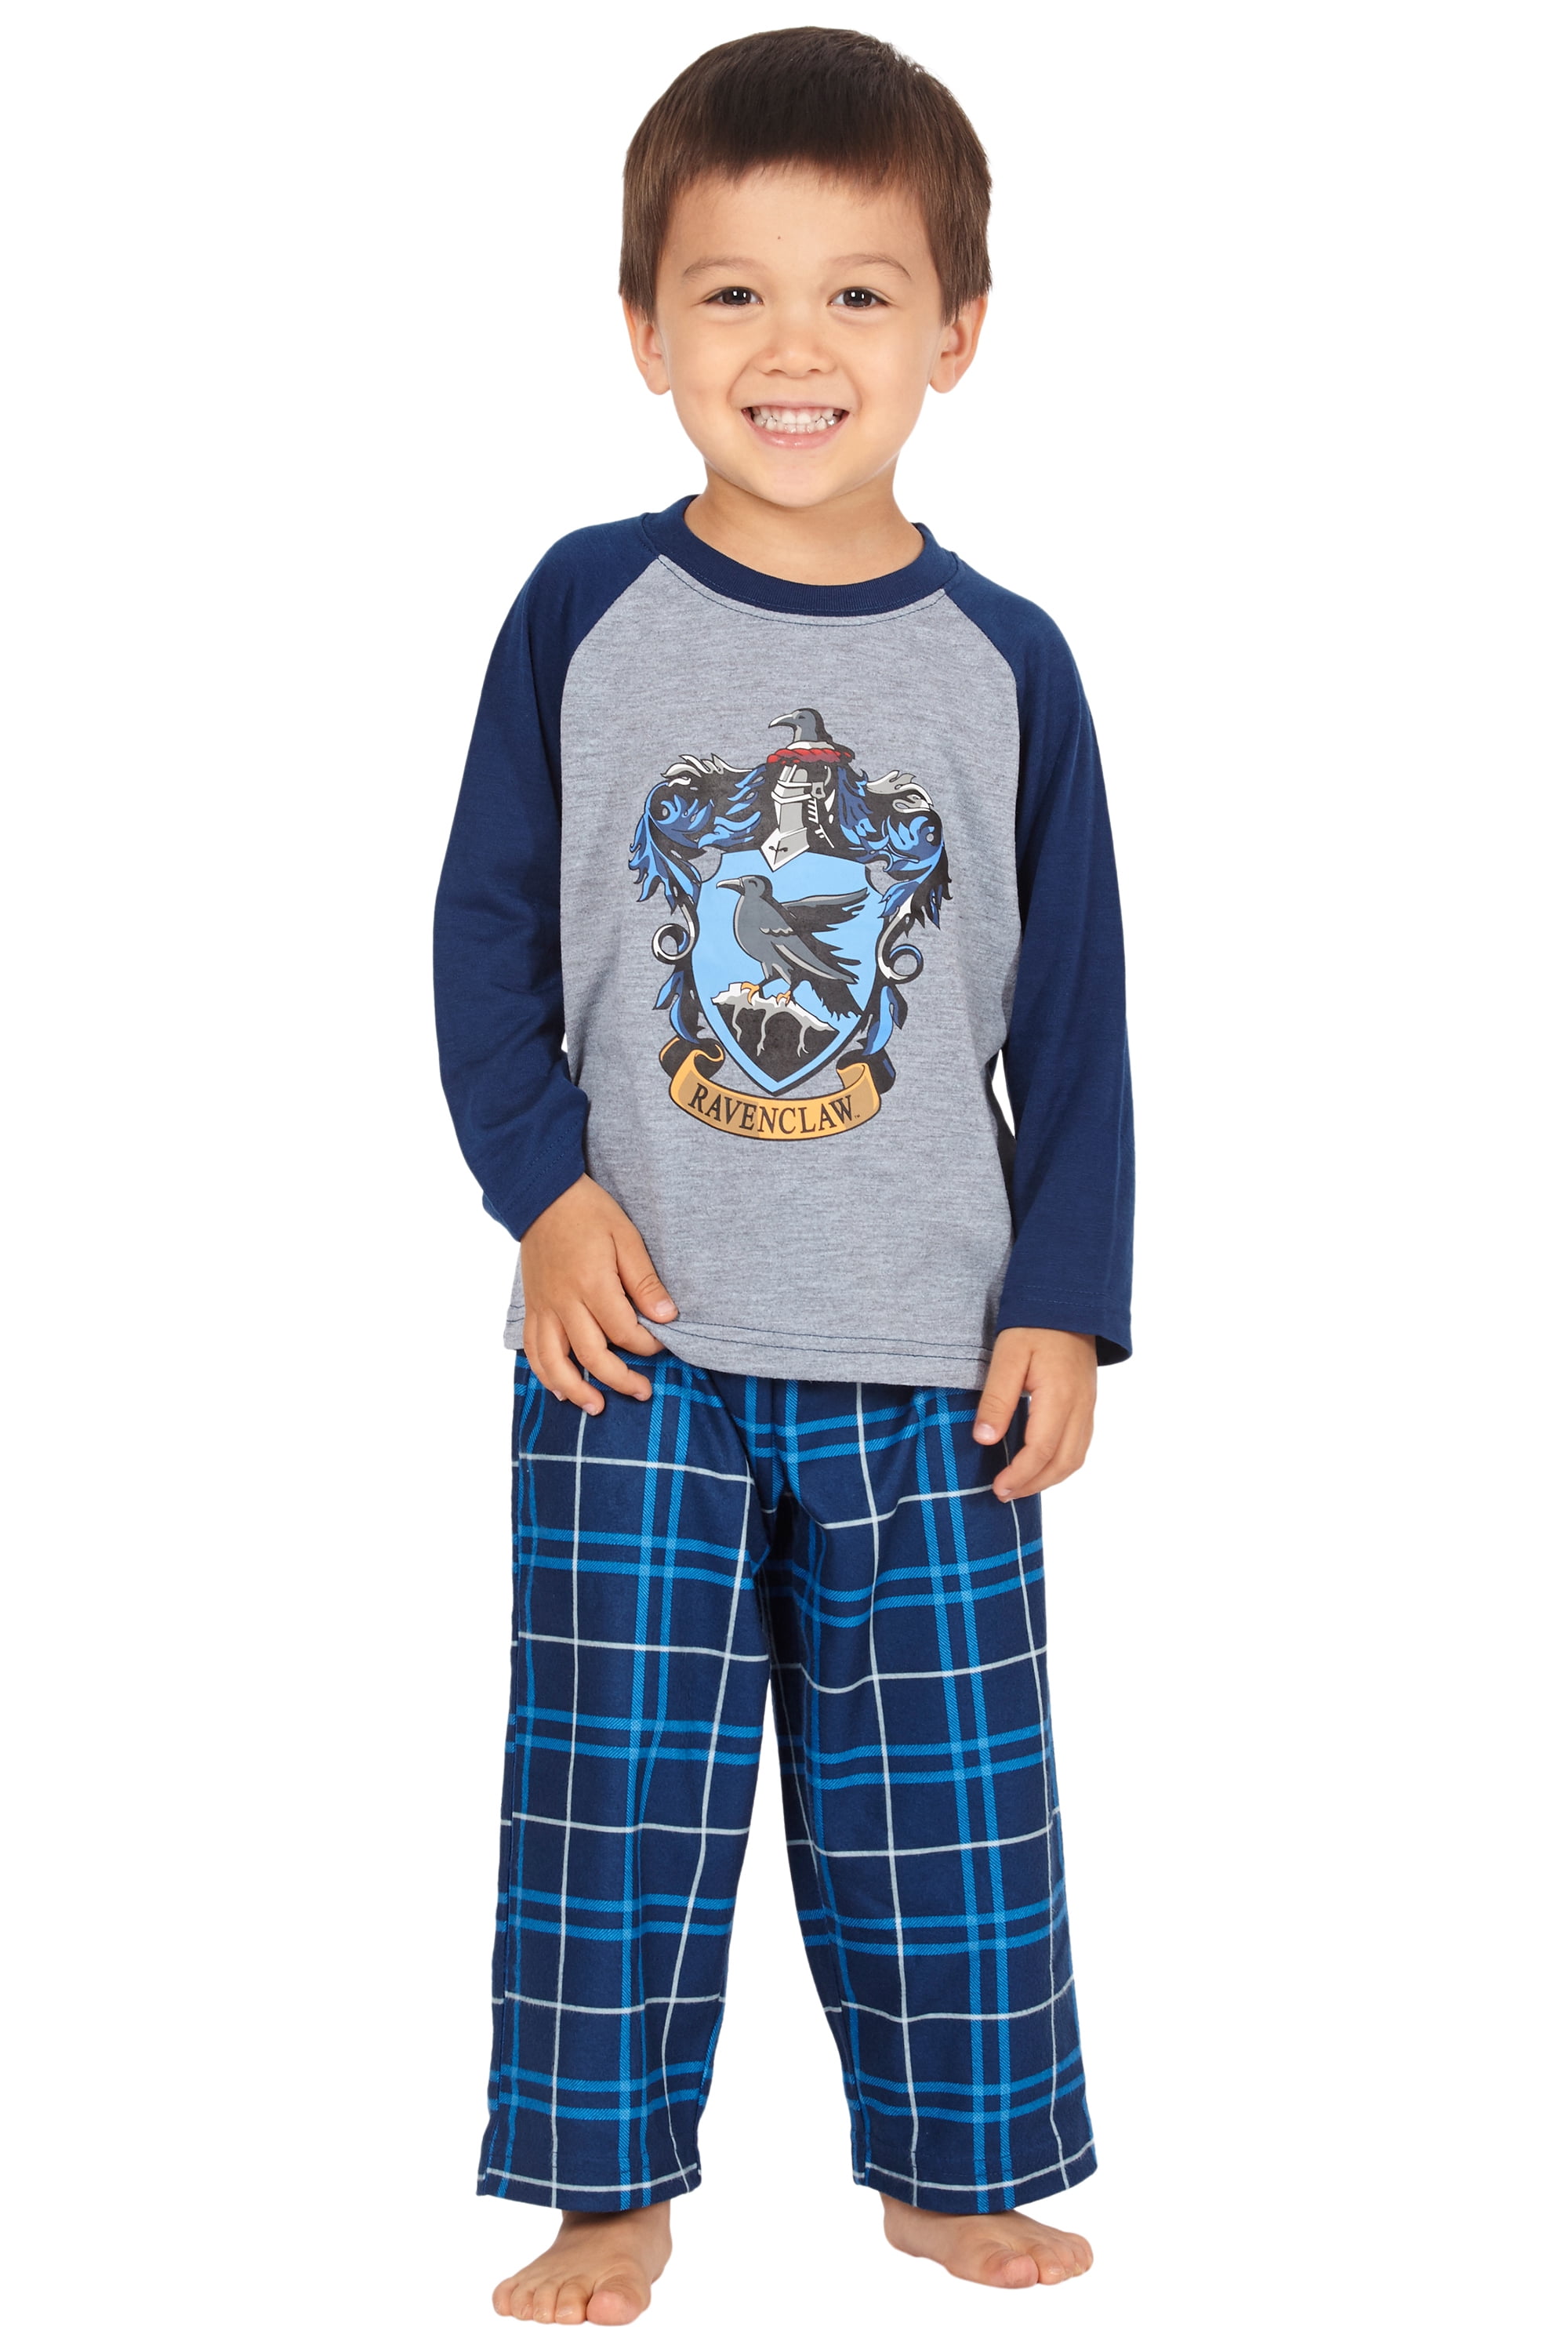 Boys Pajamas Sets Harry Potter Little Boys Long Sleeve Pajamas Size 4T. 